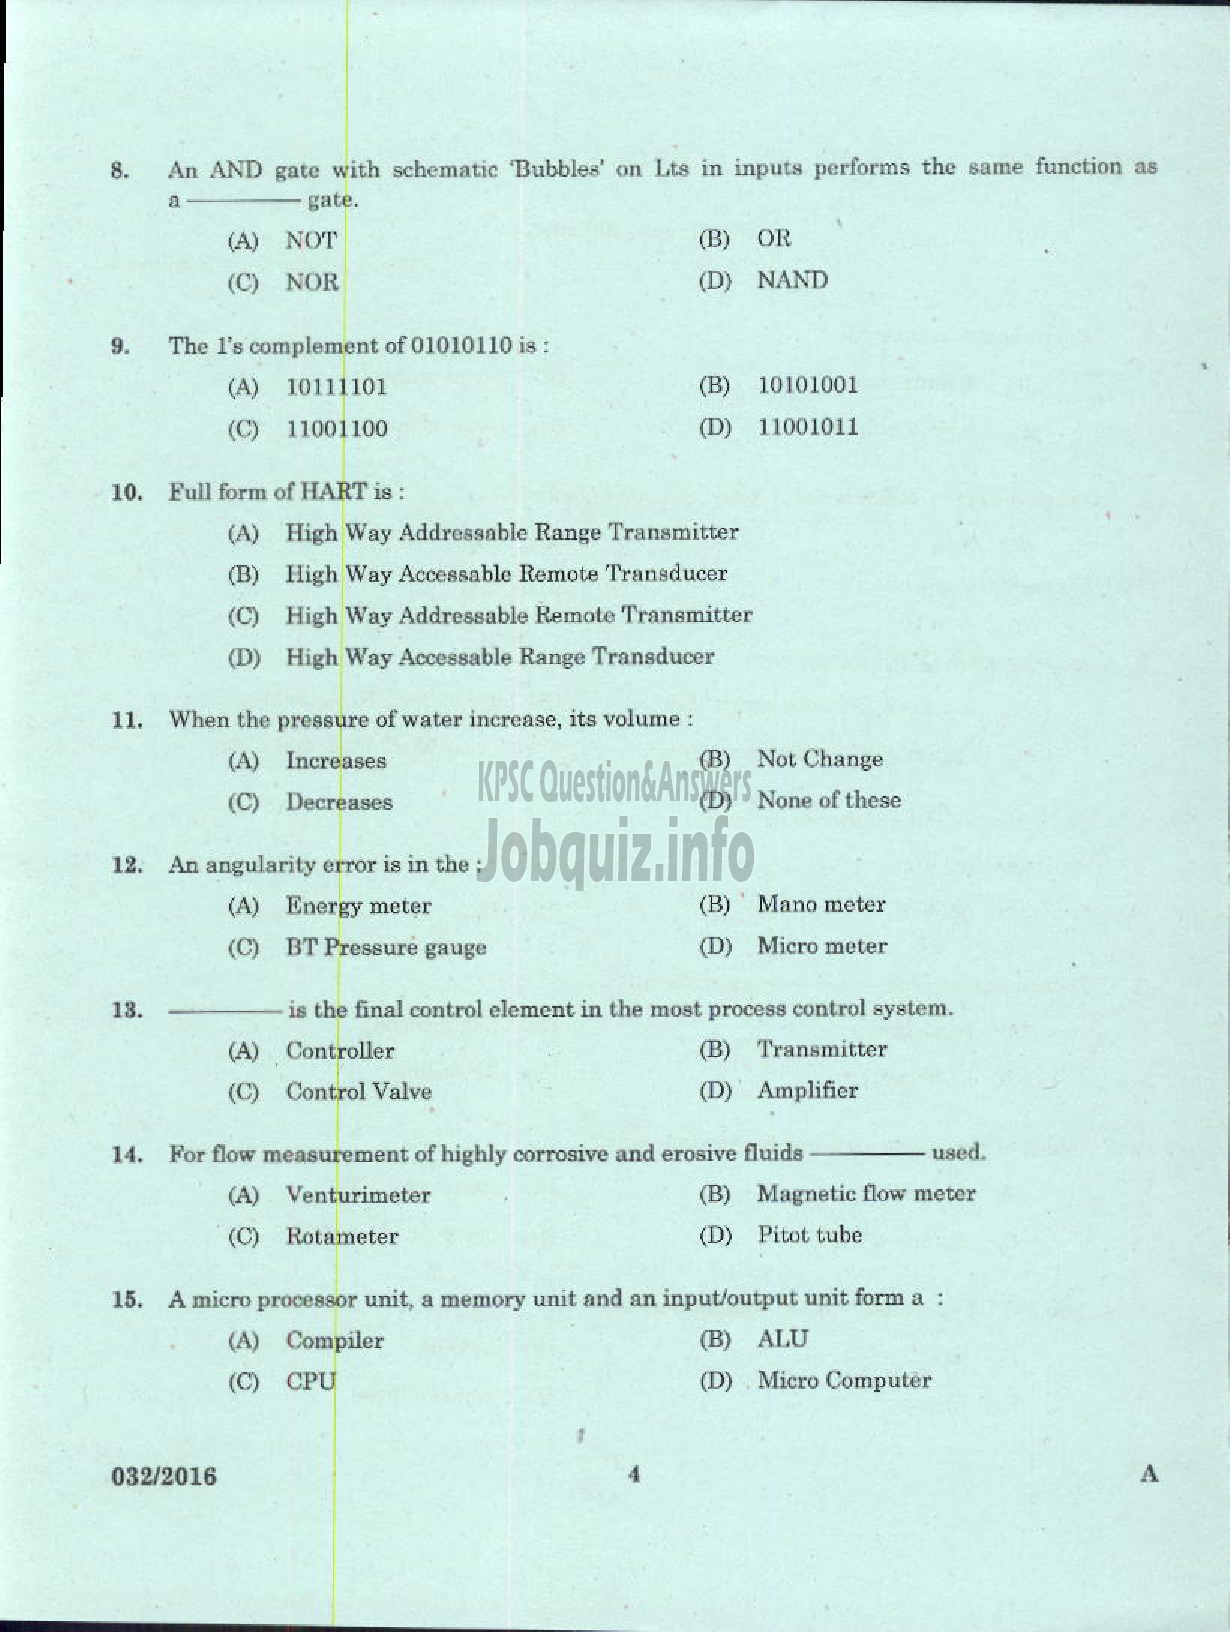 Kerala PSC Question Paper - TRADESMAN INSTRUMENT MECHANIC TECHNICAL EDUCATION-2